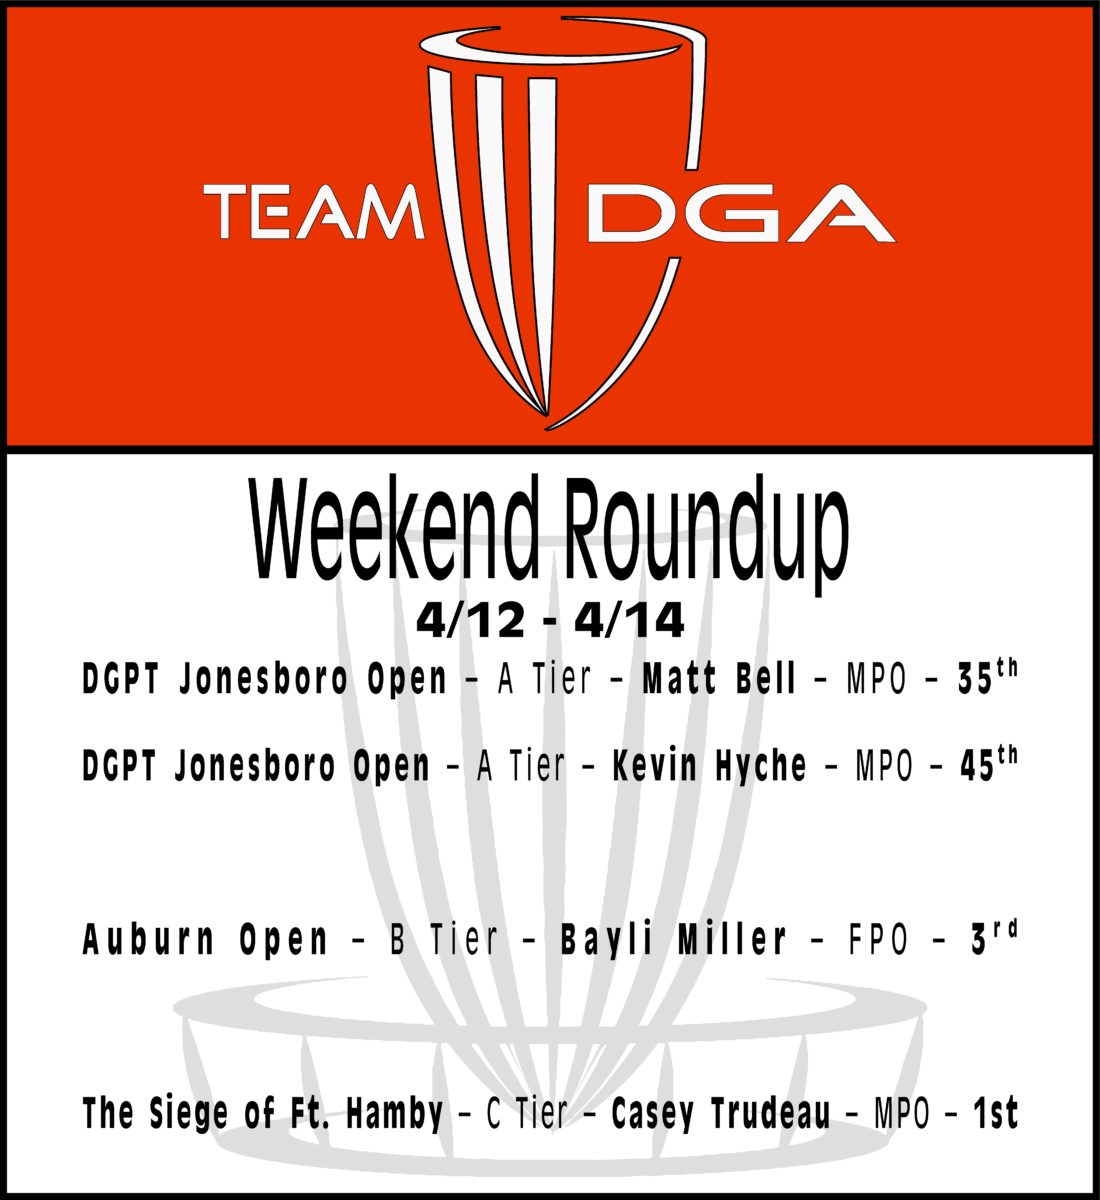 Team DGA Weekend Roundup 4/12 - 4/14